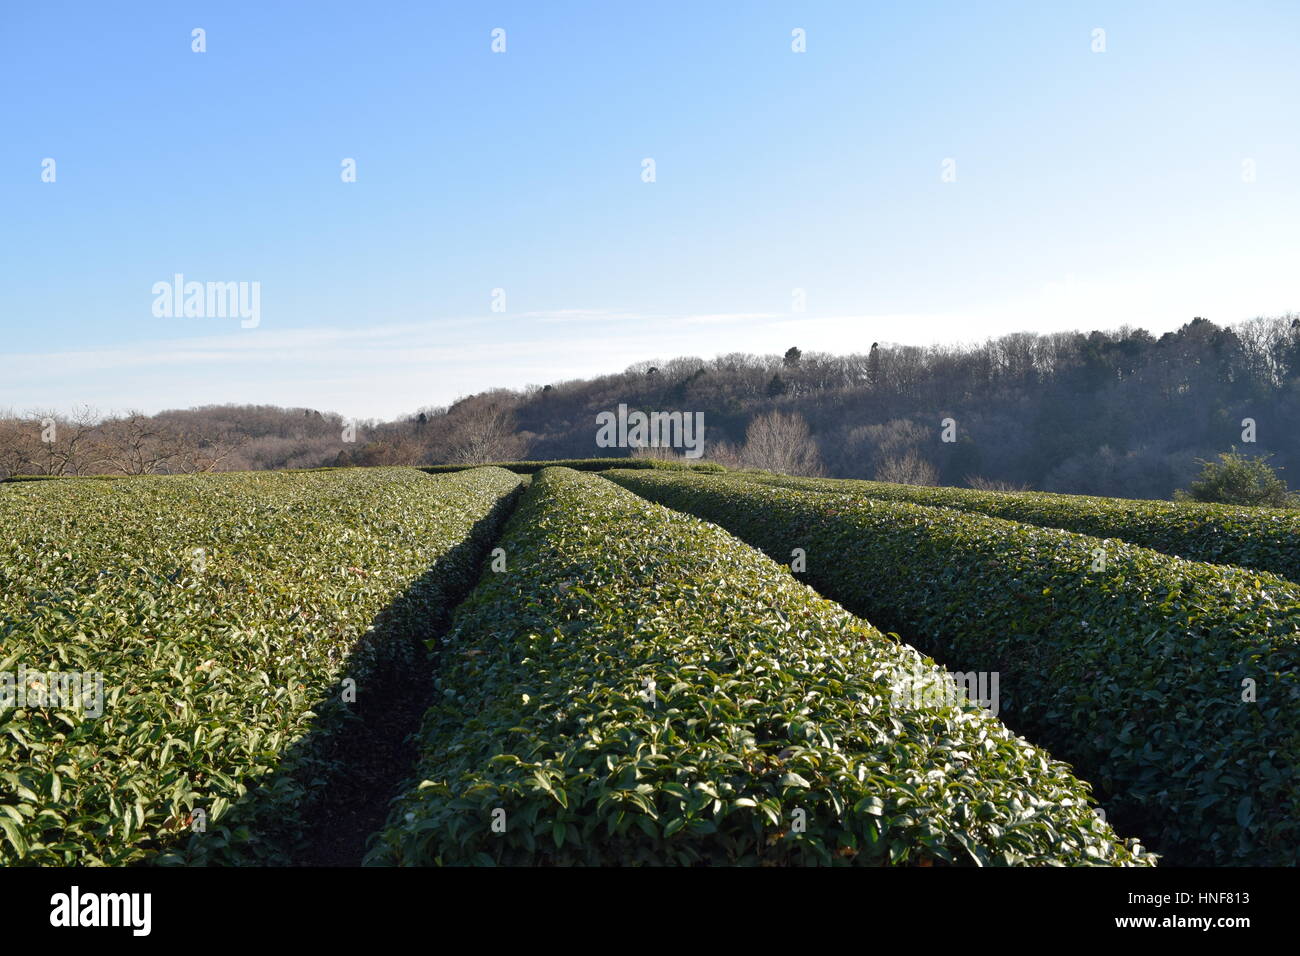 Tea plantation farm Stock Photo